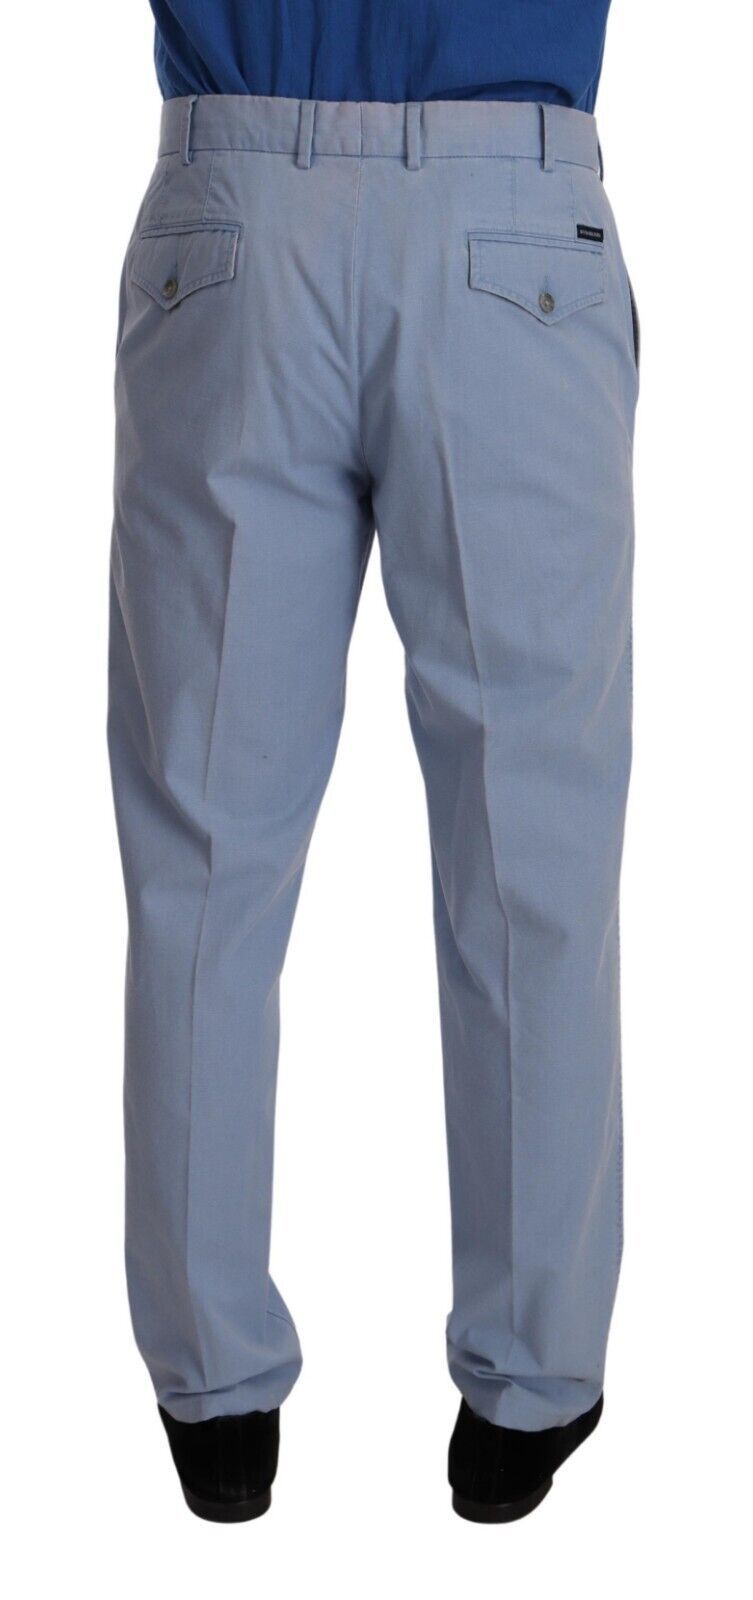 Burberry Men's Light Blue Cotton Straight Chinos Dress Pants